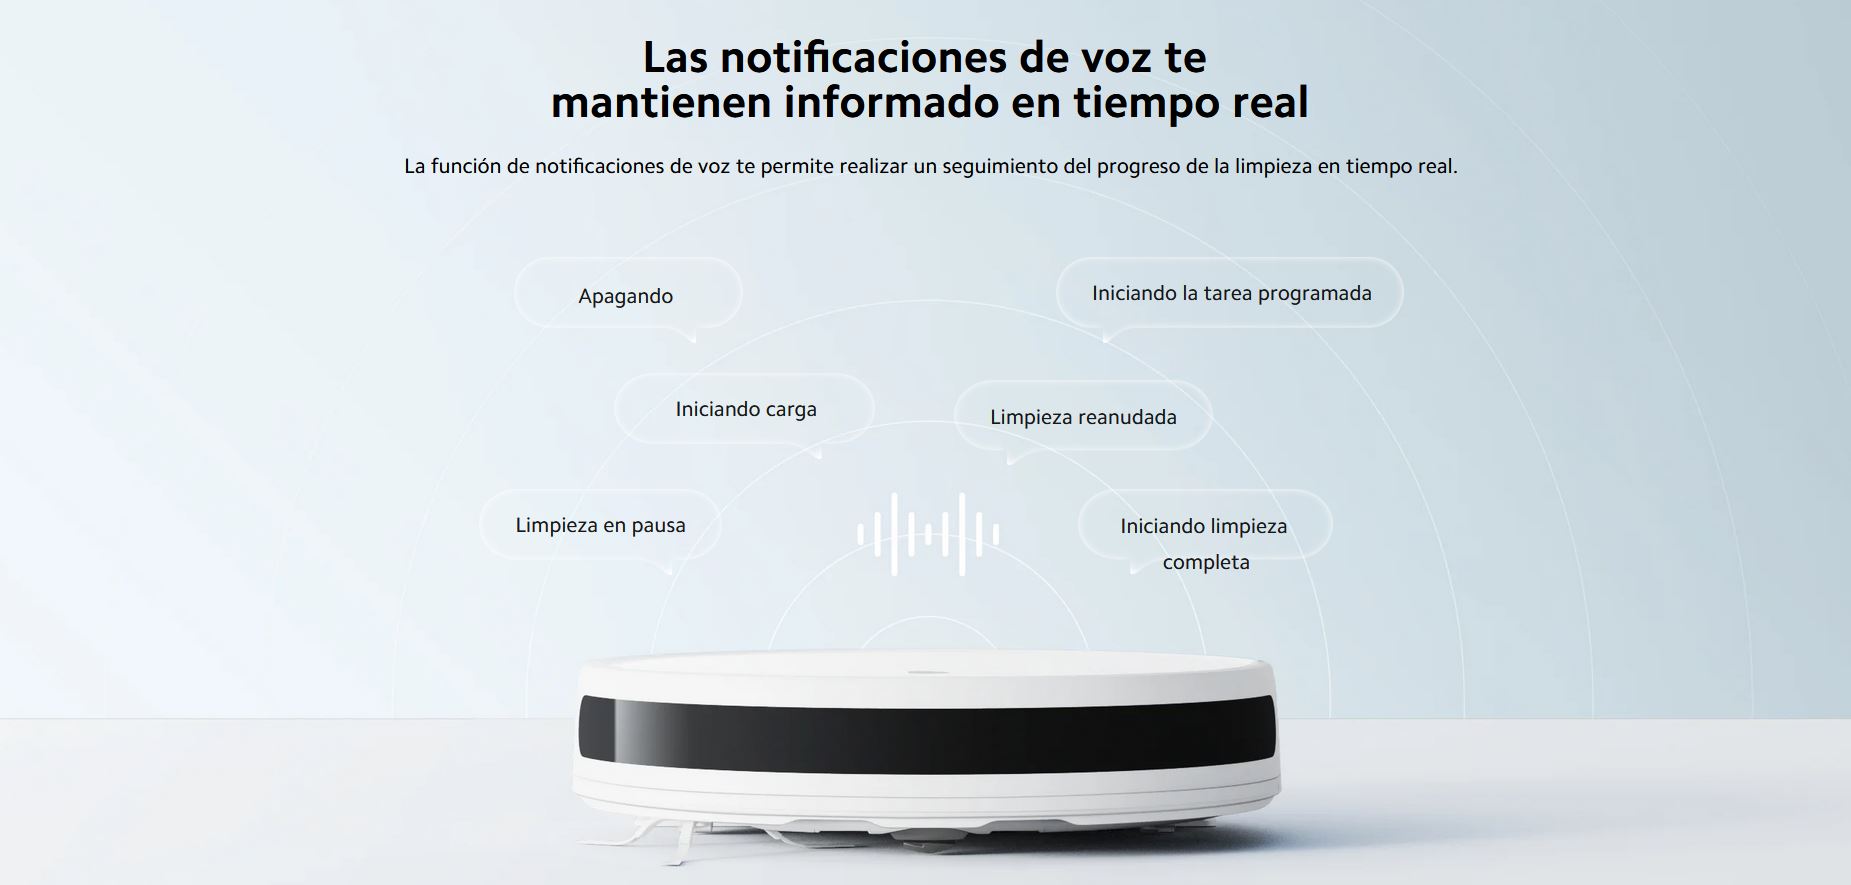 Comprar Xiaomi Robot Vacuum E12 ▷ Tienda Xiaomi kiboTEK España